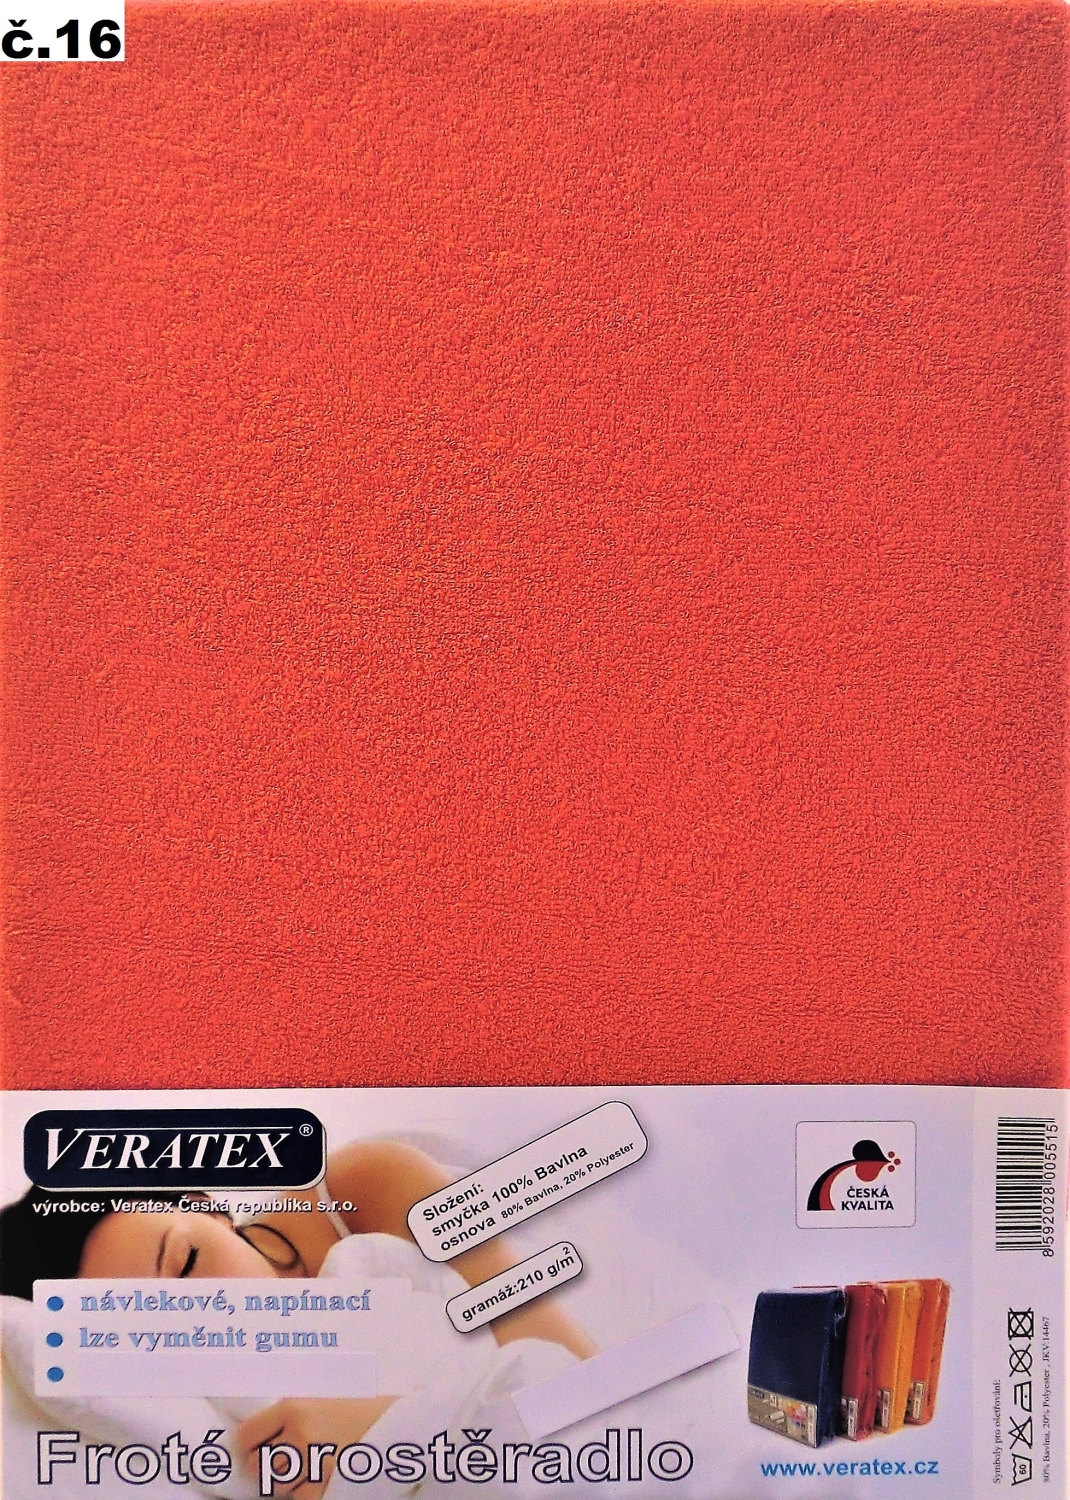 Veratex Froté prostěradlo 140x220/16 cm (č.16 malina) 140 x 220 cm